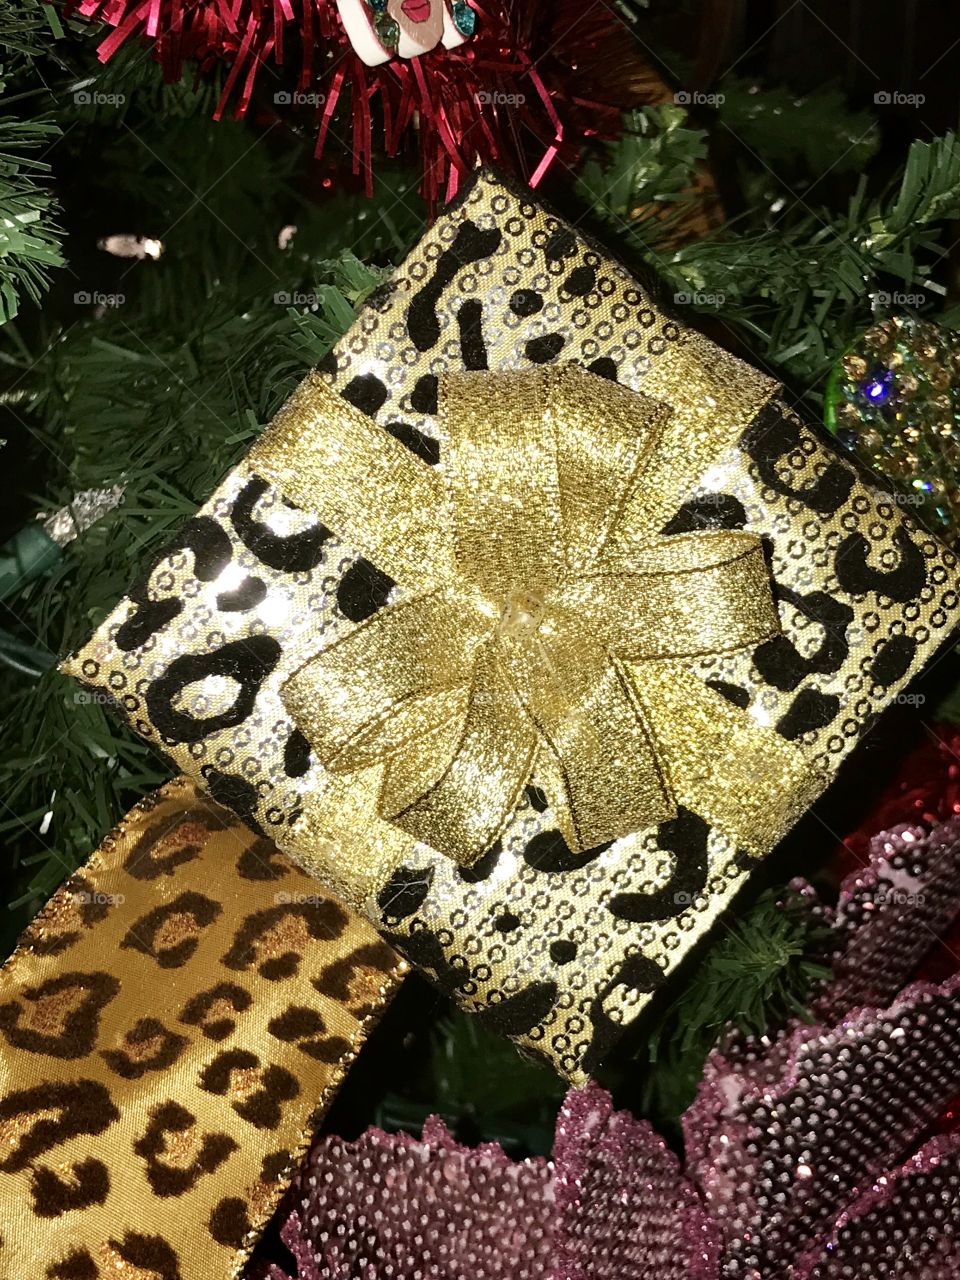 Leopard print Christmas gift ornament 